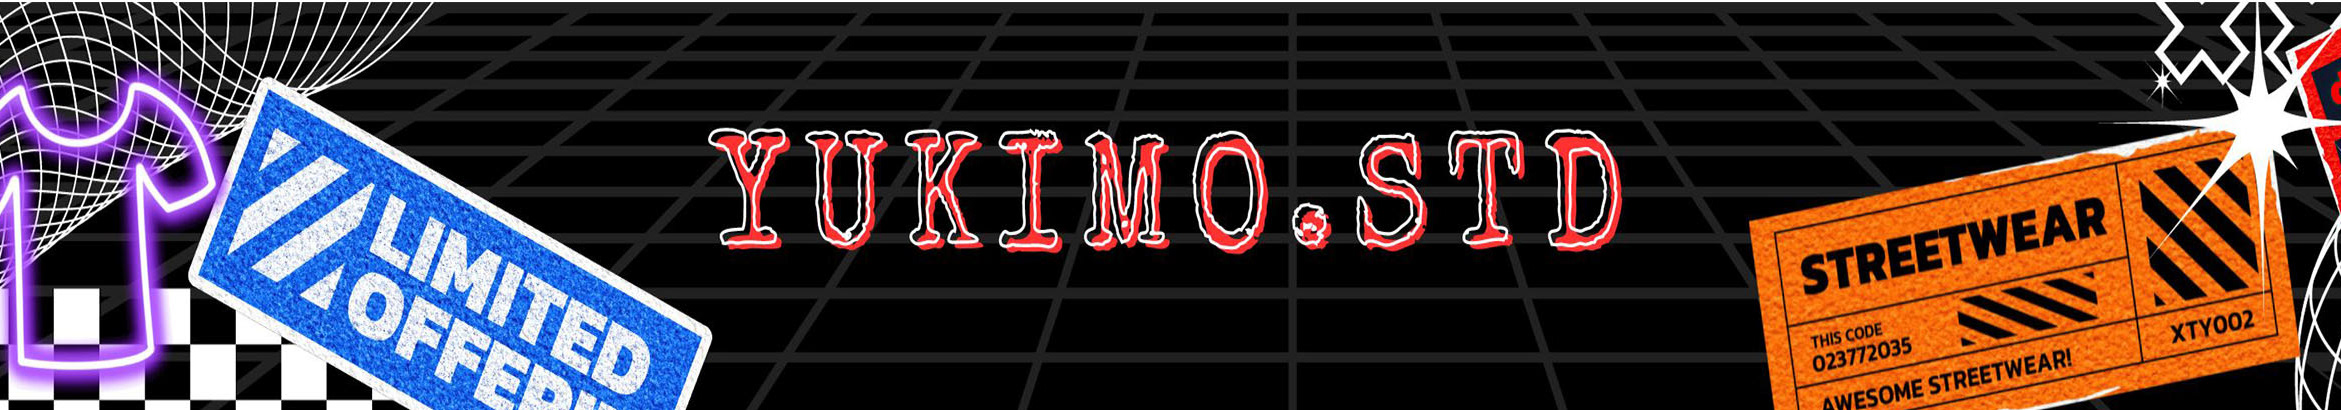 Yukimo Std's profile banner